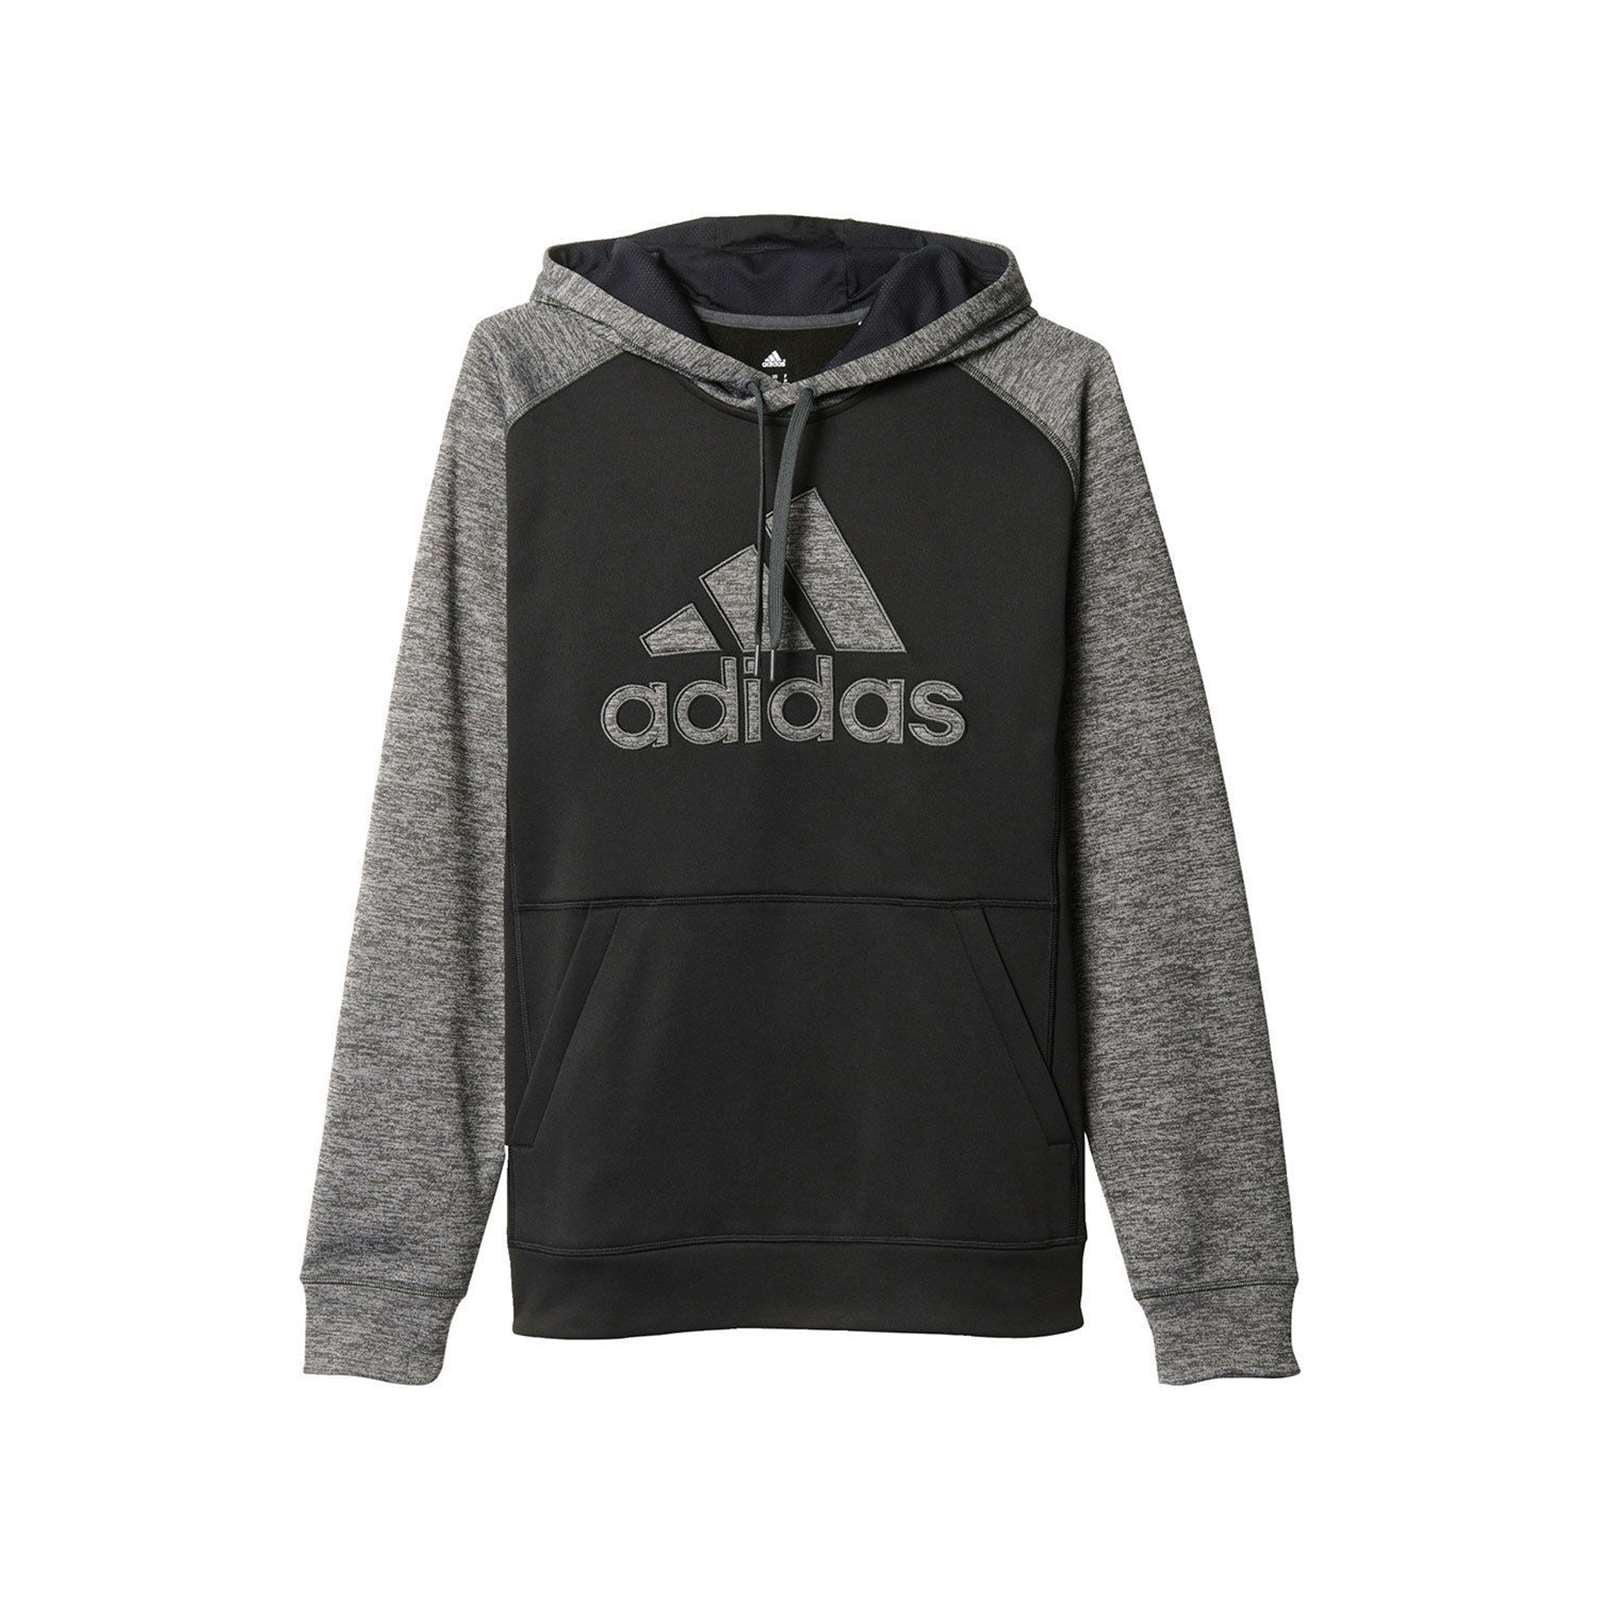 adidas men's team issue pullover hoodie